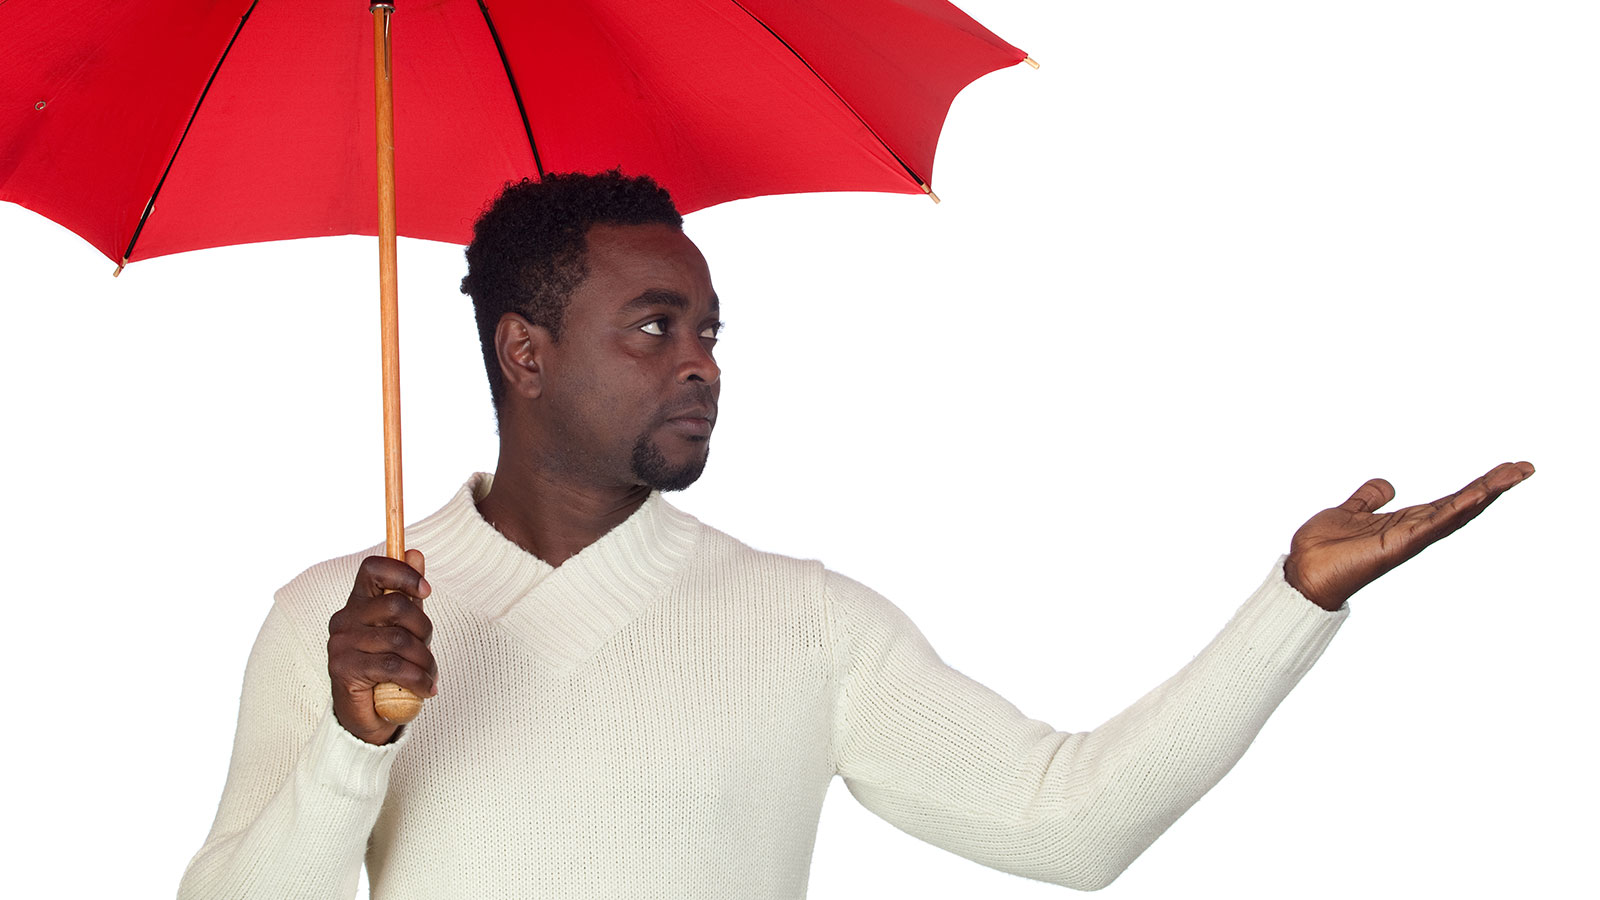 Man under umbrella, uncertain about rain